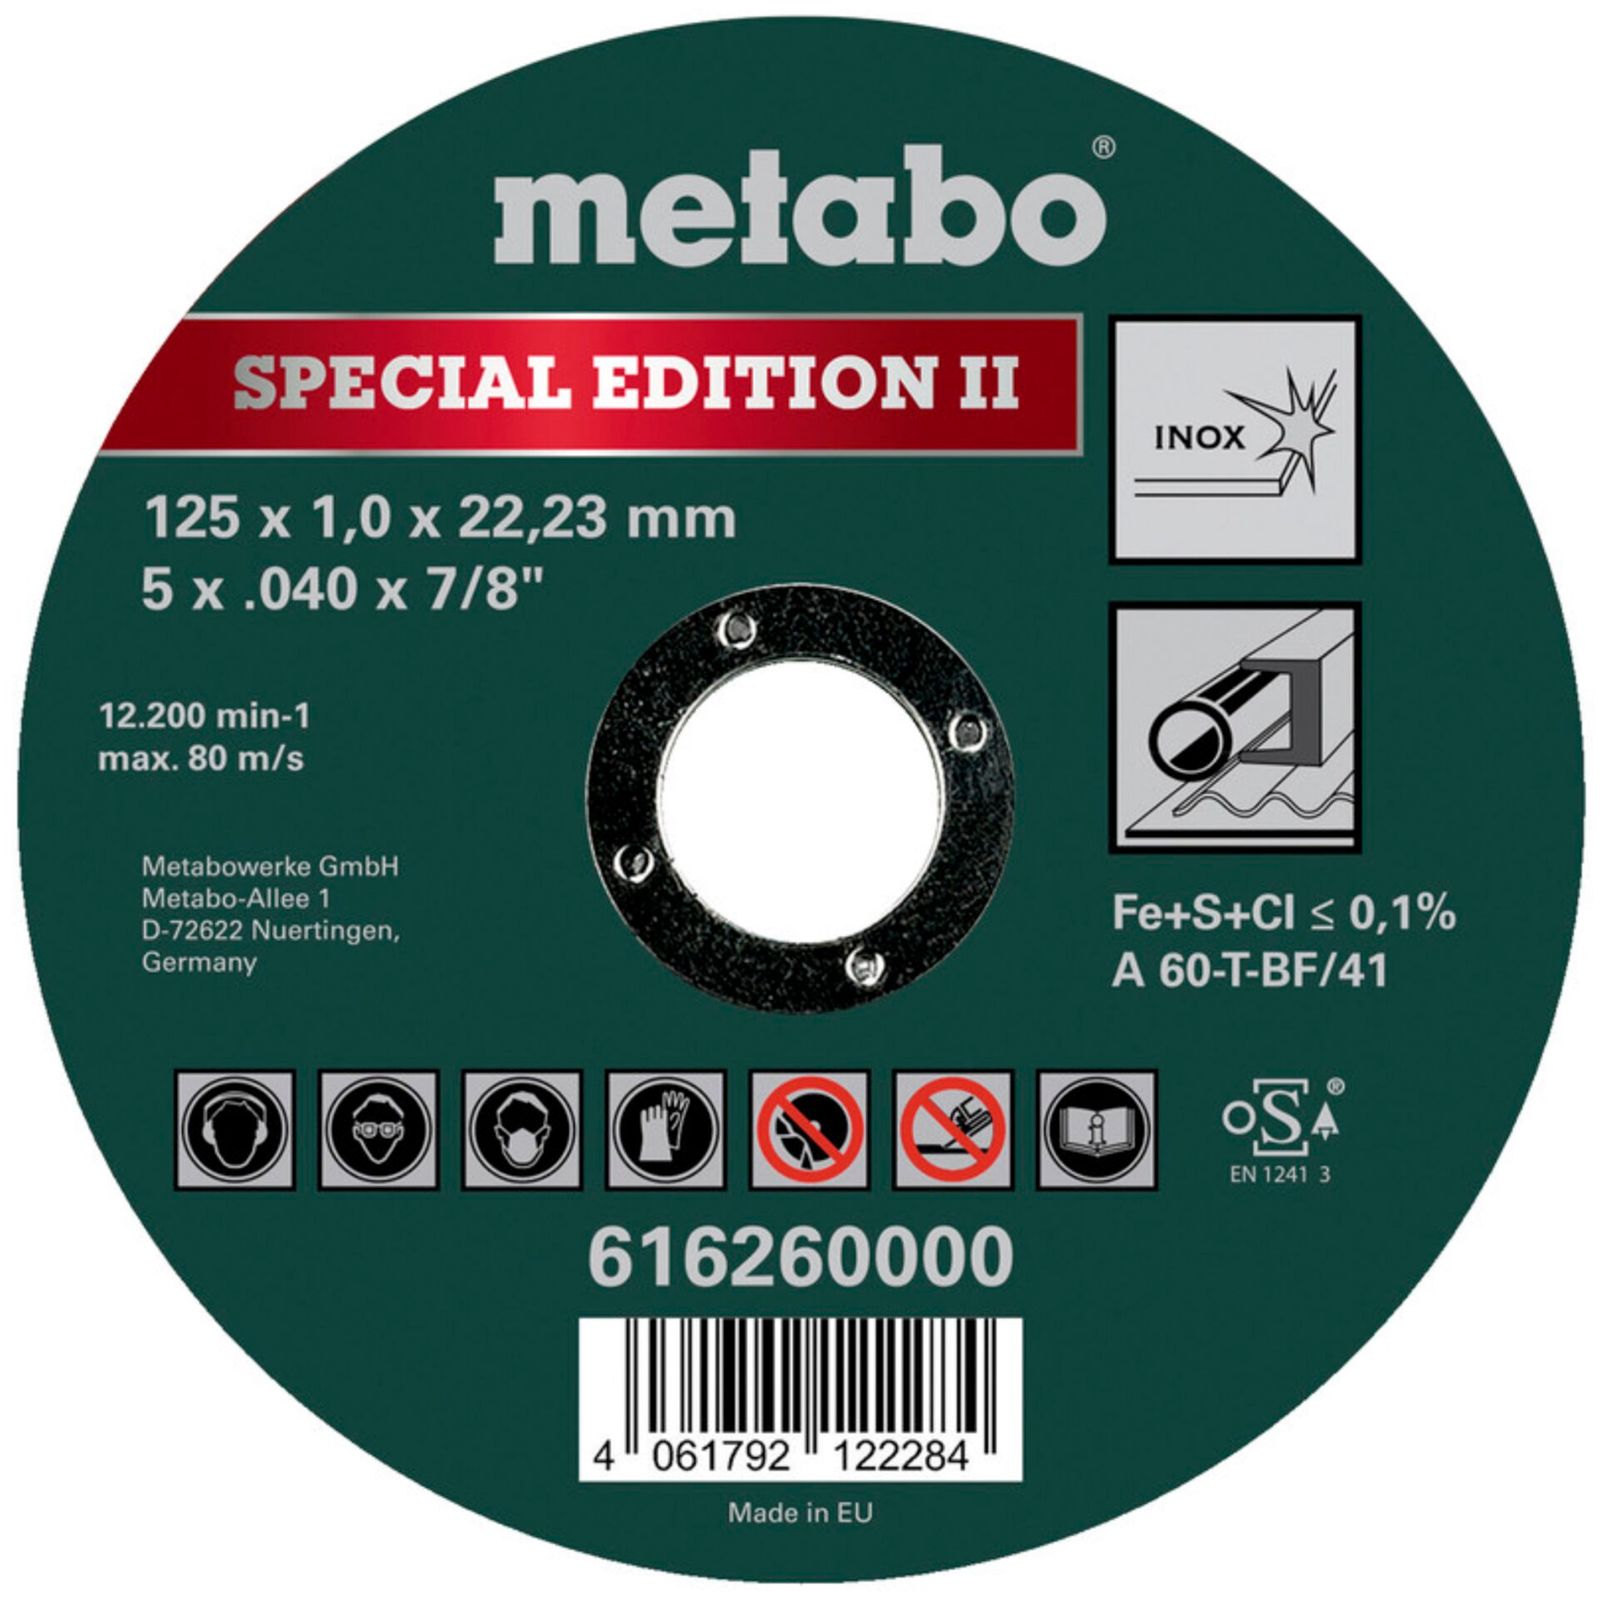 Metabo Special Edition II 125x 1,0x22,23 mm Inox